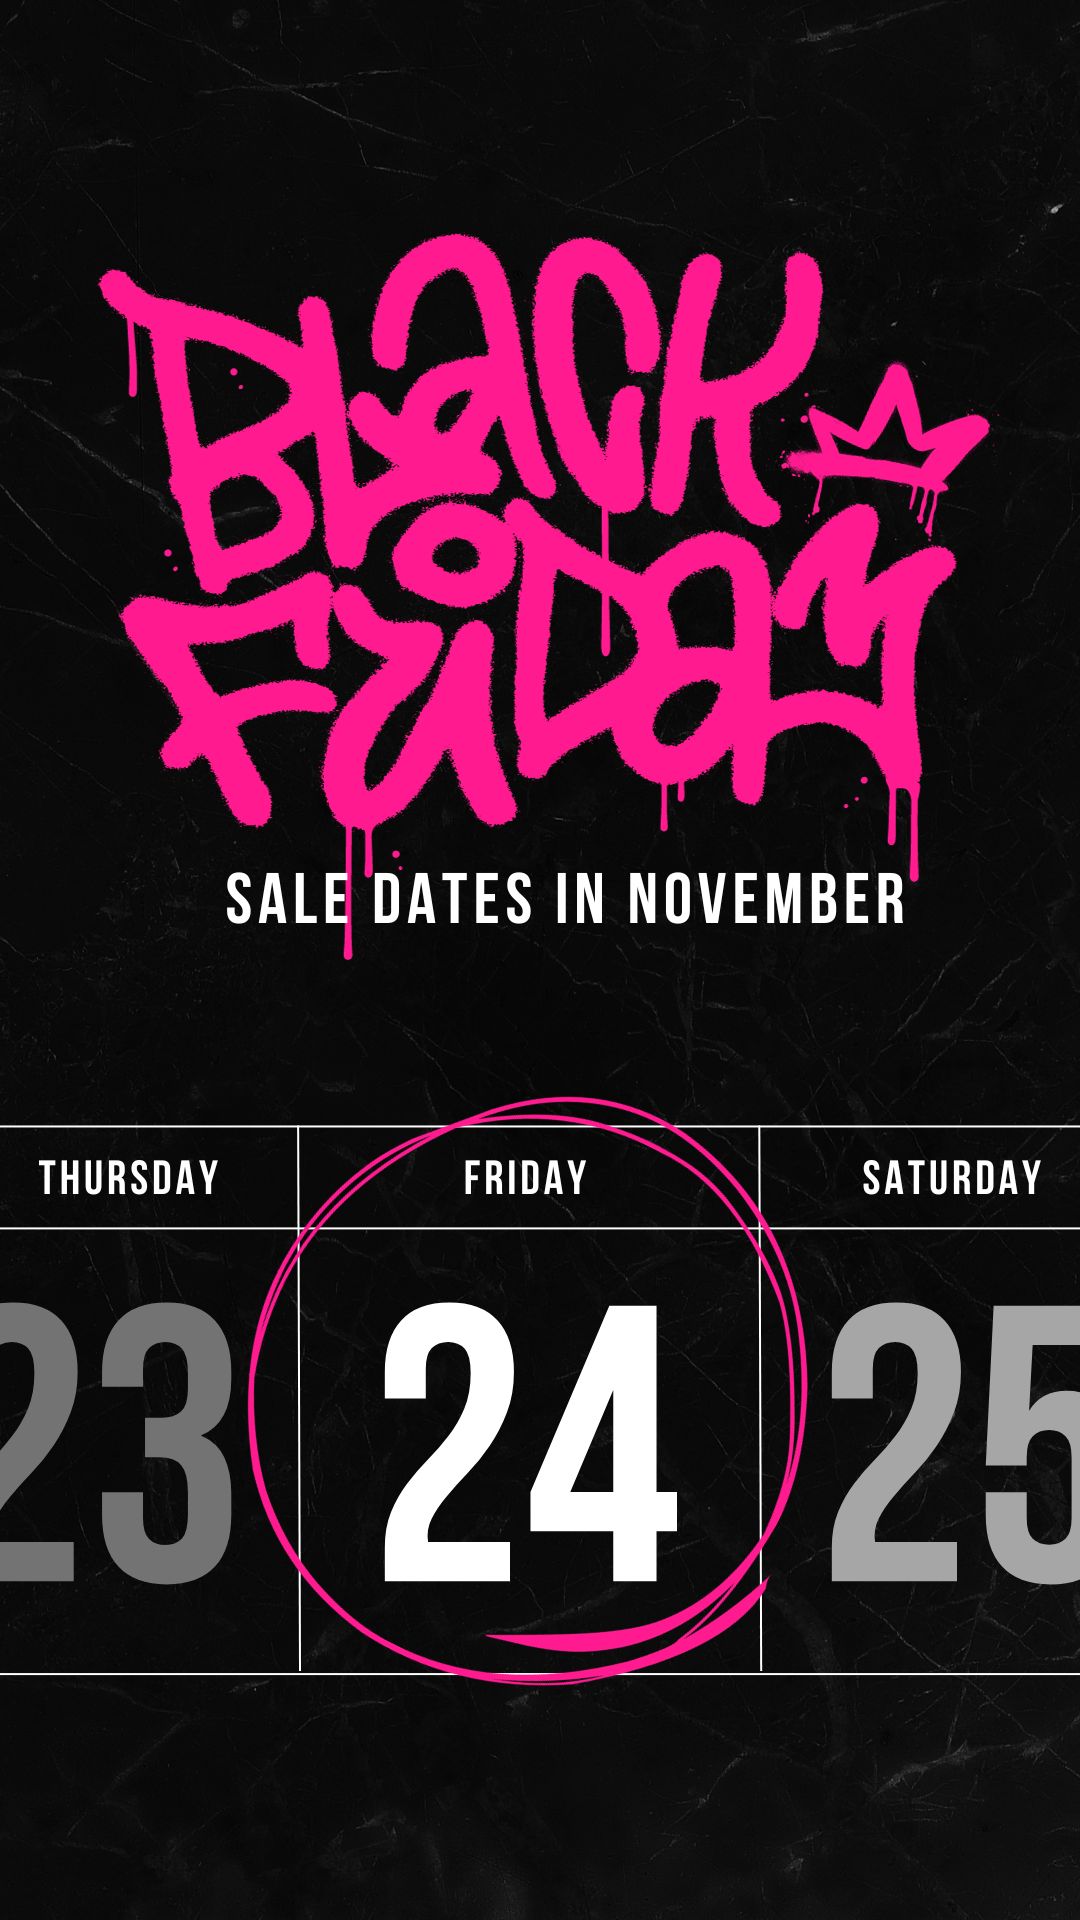 Black Friday Sale Dates